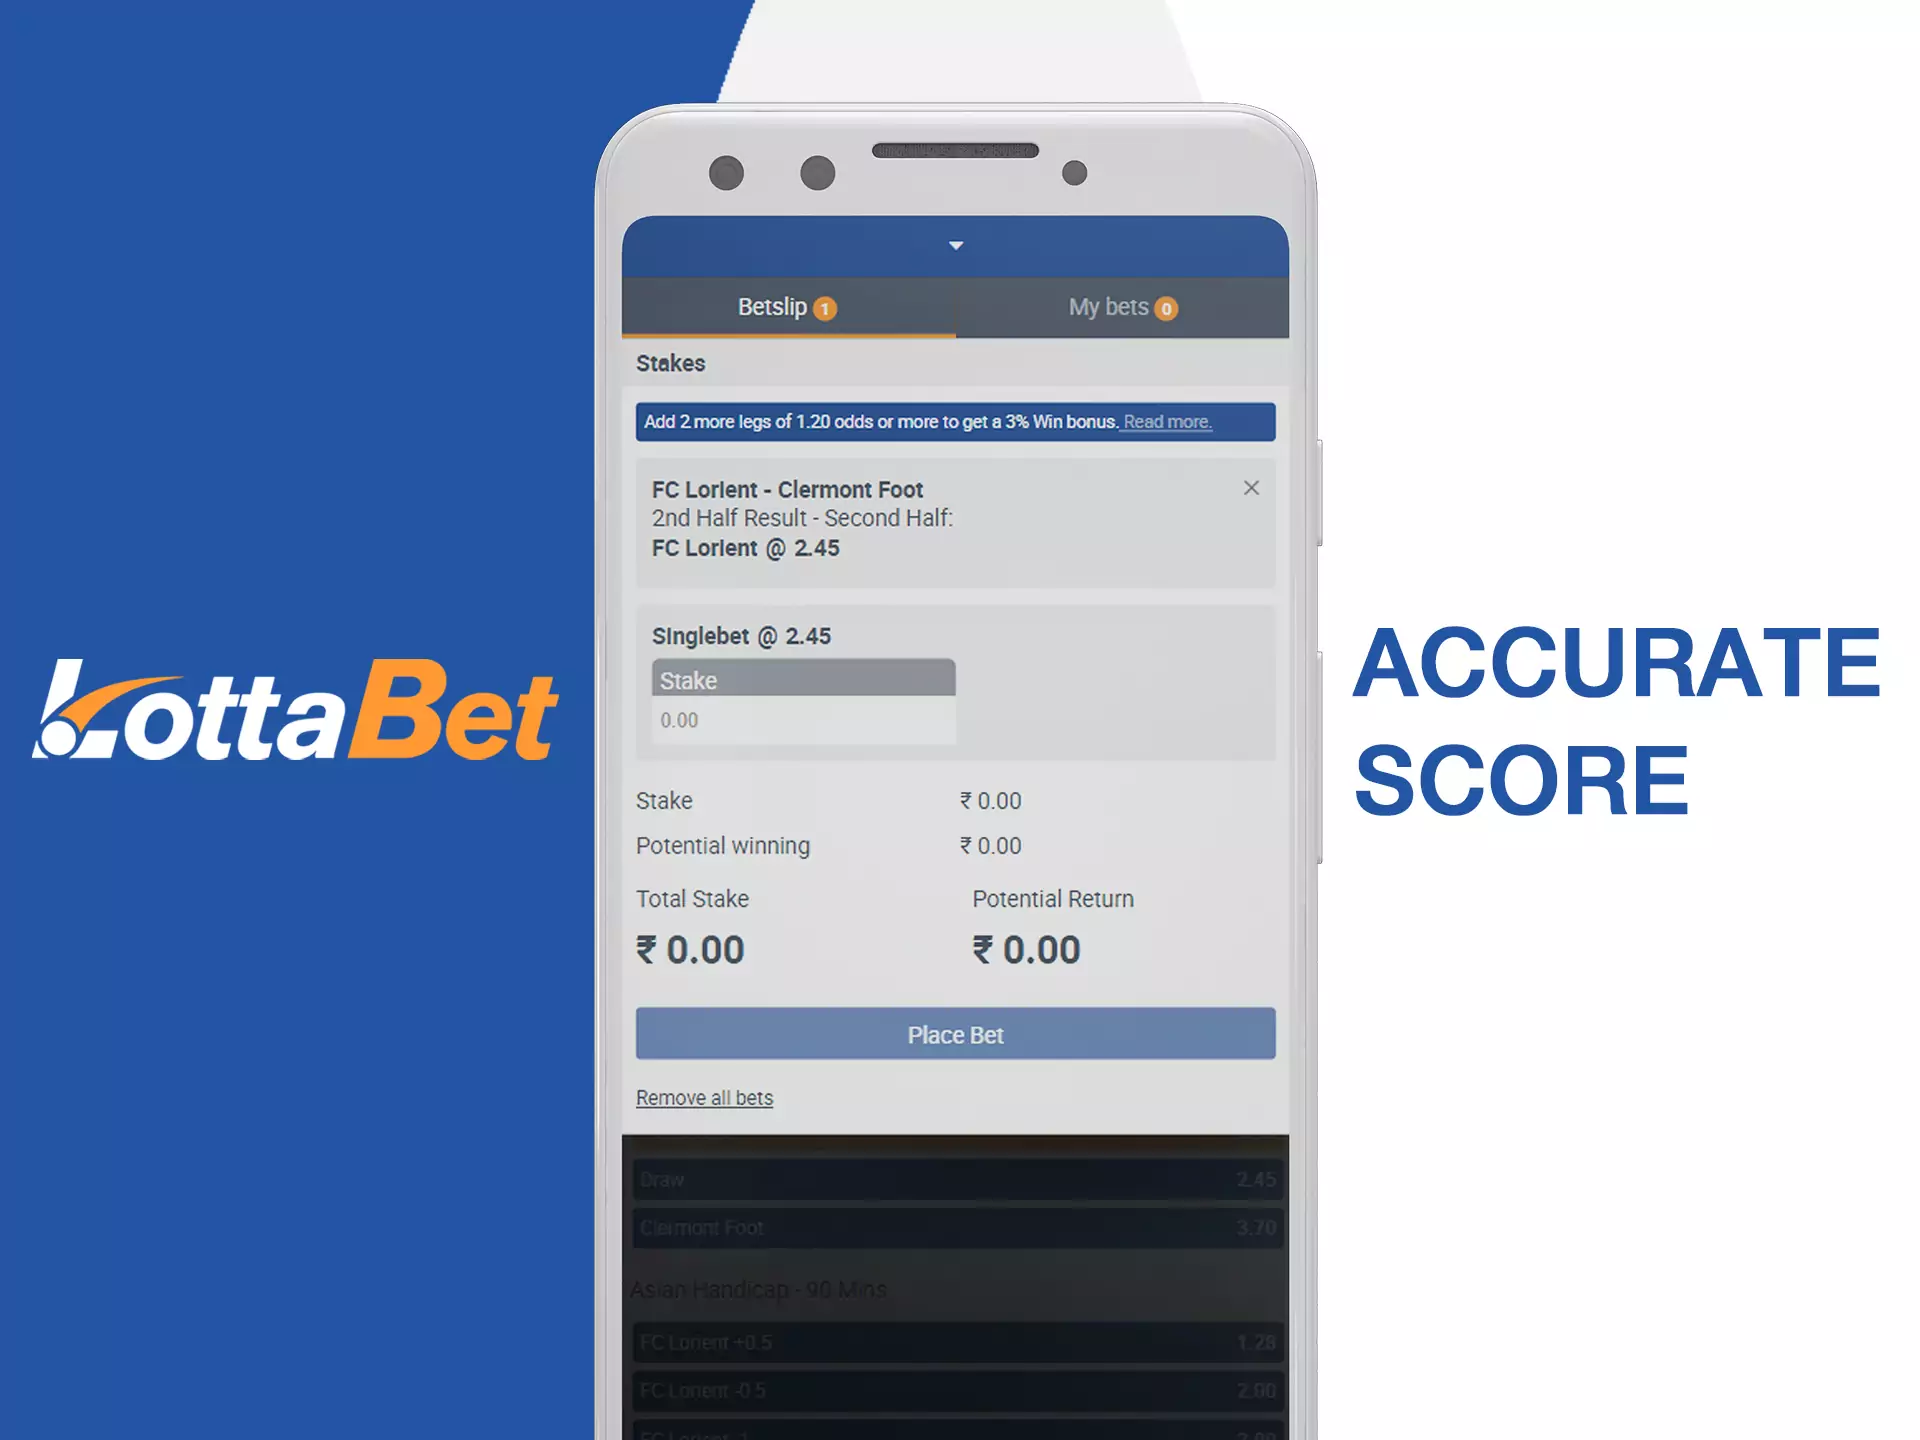 Choose best odds to bet on in Lottabet app.